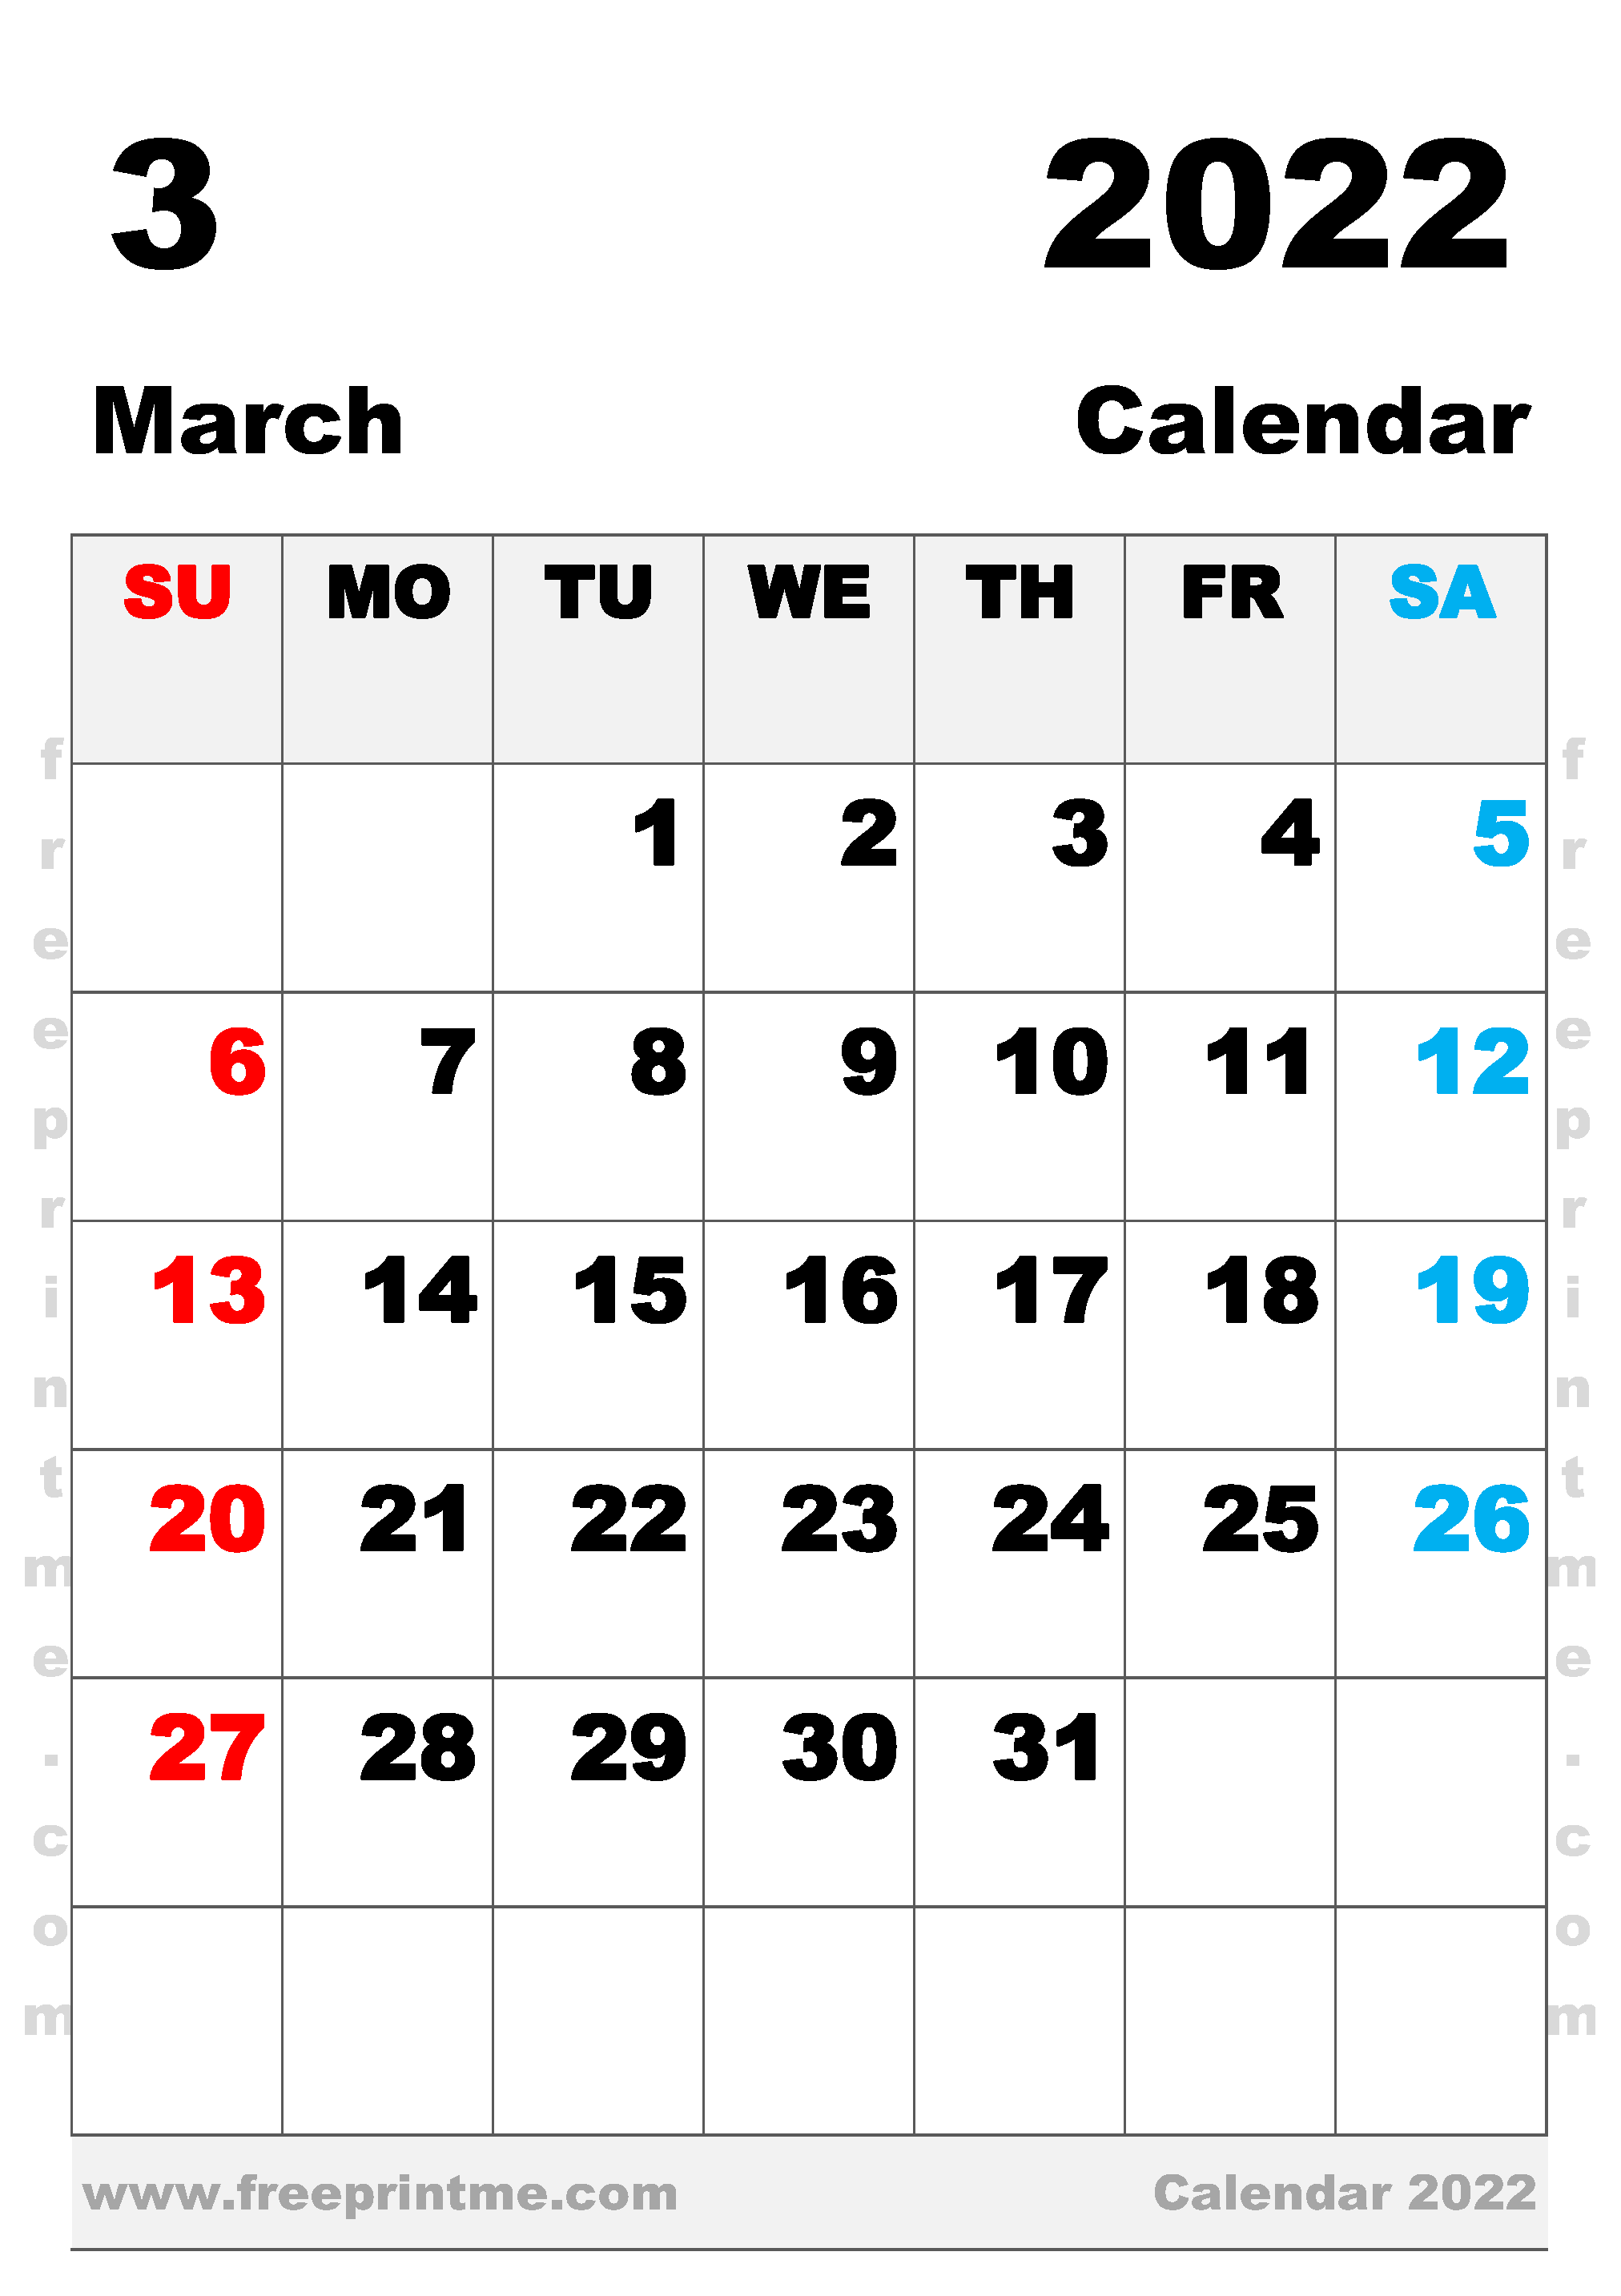 Free Printable March 2022 Calendar B4